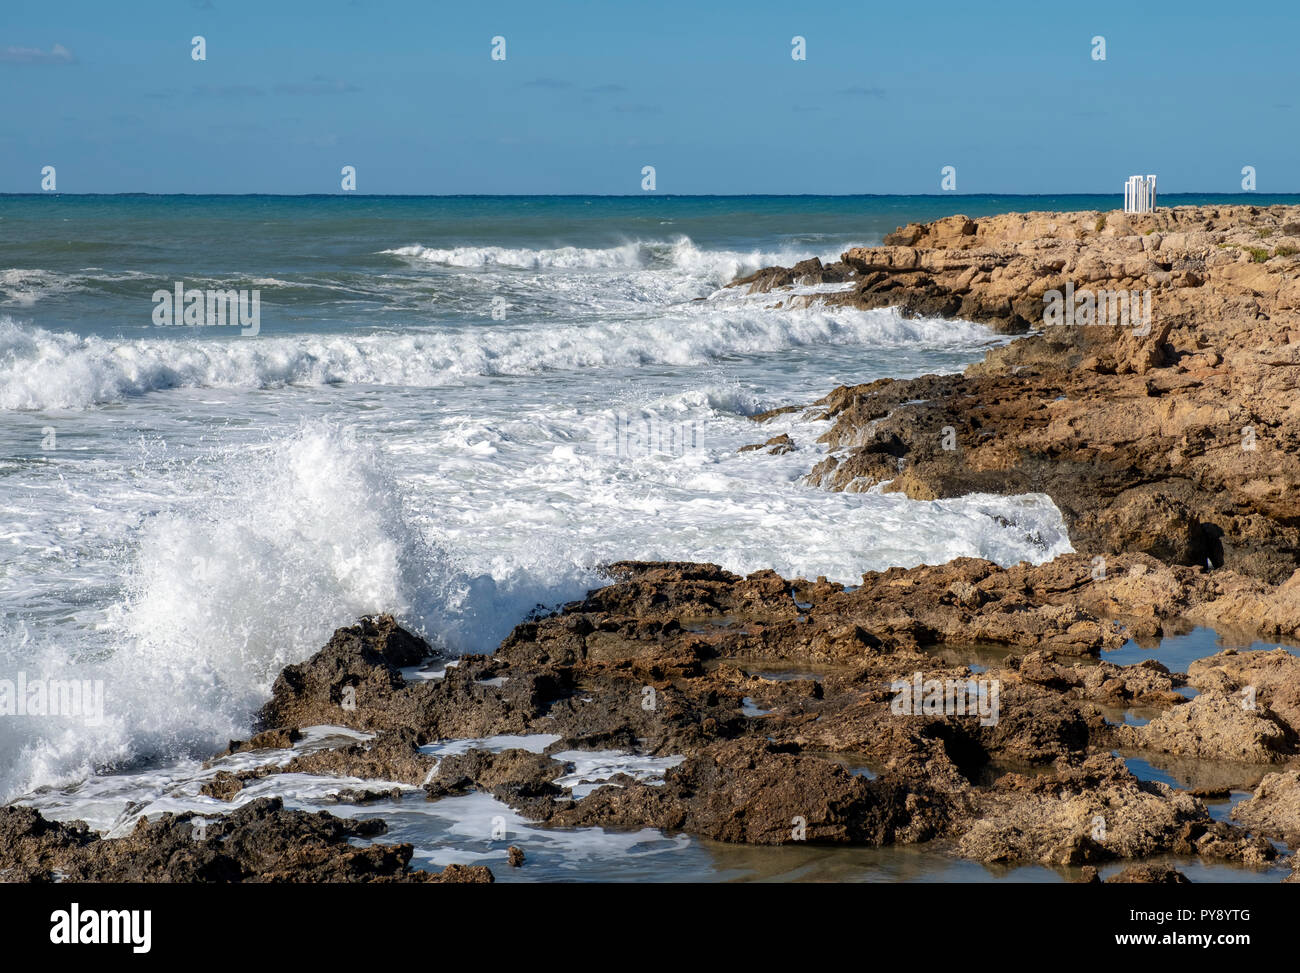 People watch as large waves crash into the shore near Paphos Castle, Paphos, Cyprus Stock Photo